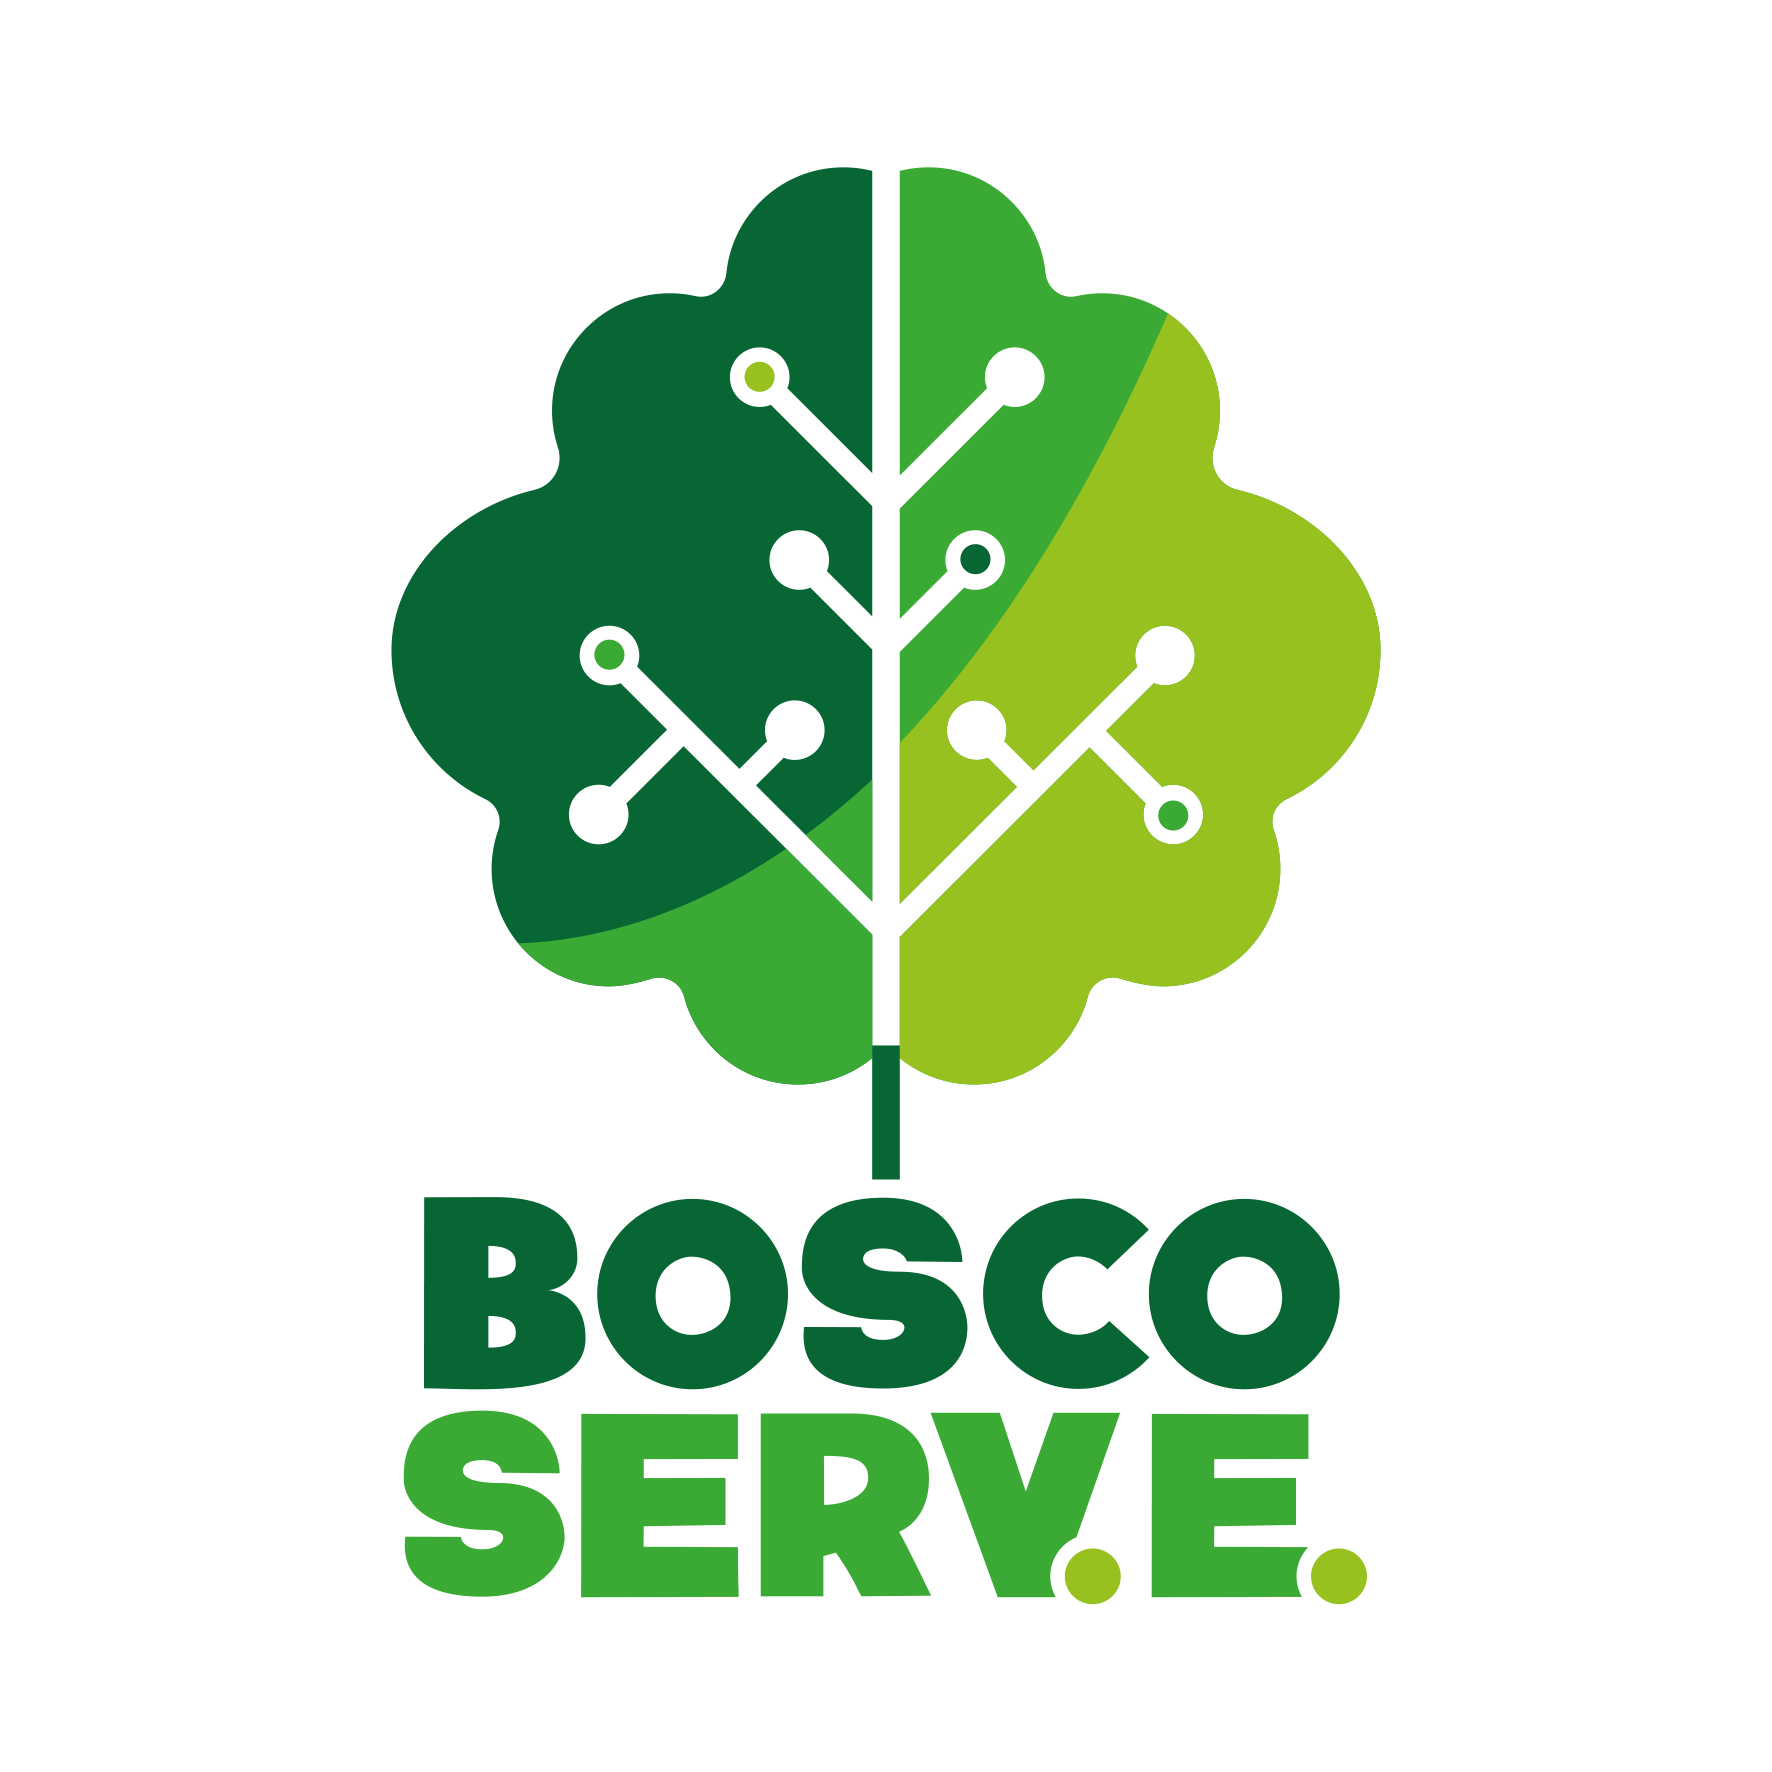 Bosco serve